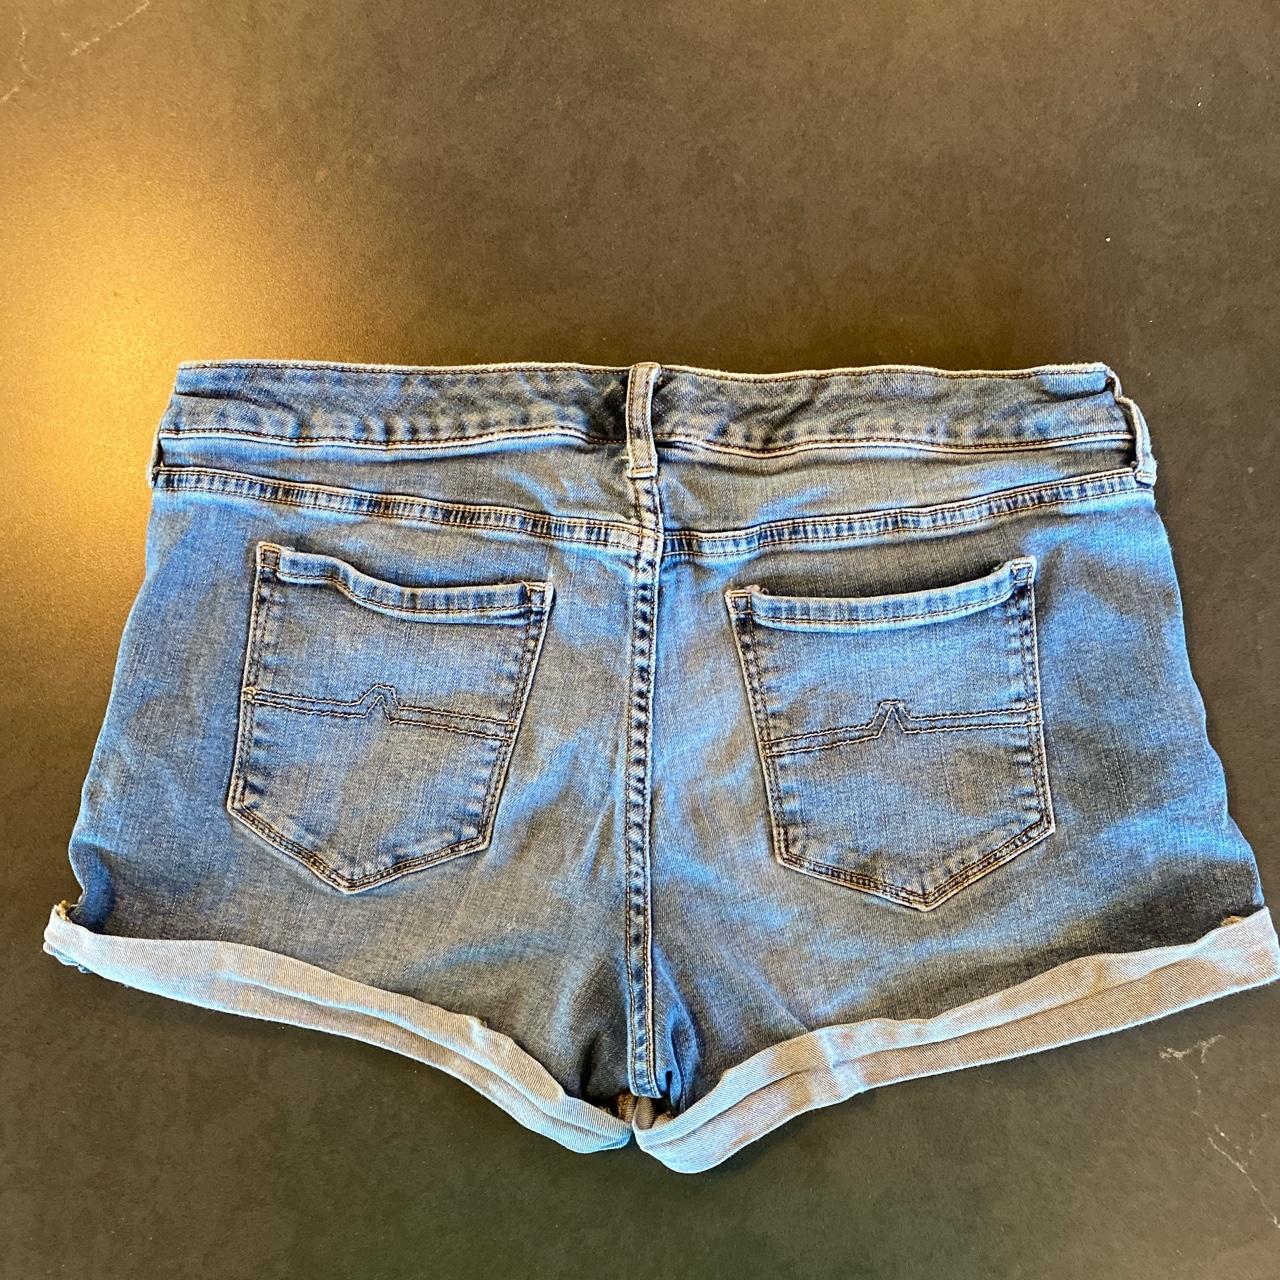 Product Image 2 - Cute Arizona Jeans light washed